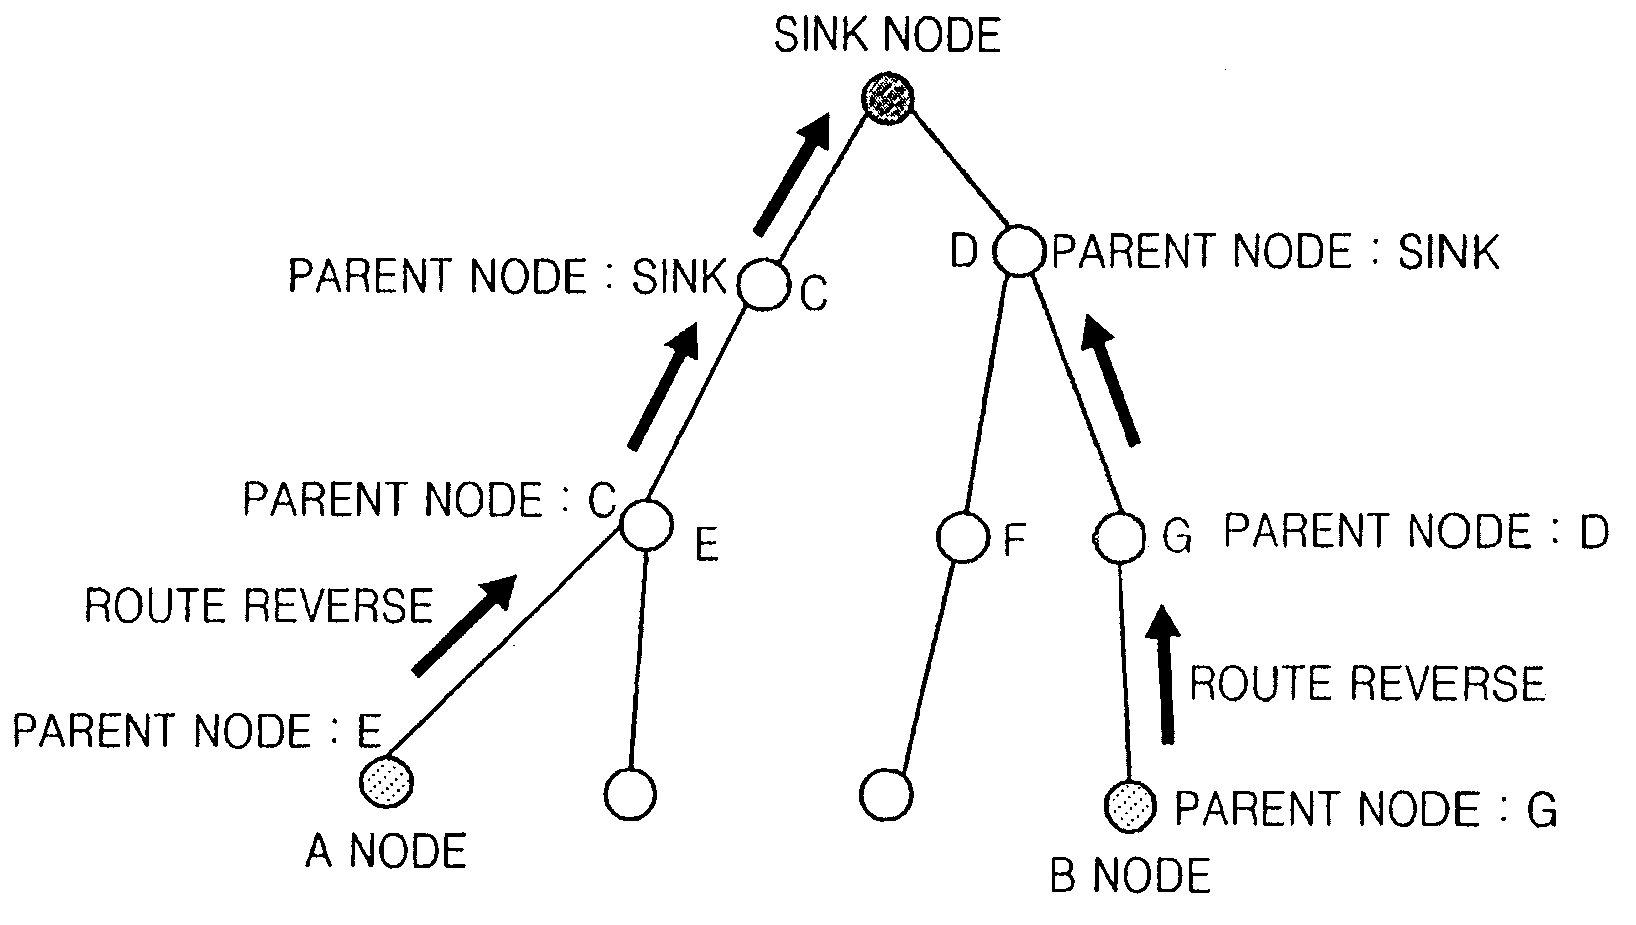 Routing method in sensor network